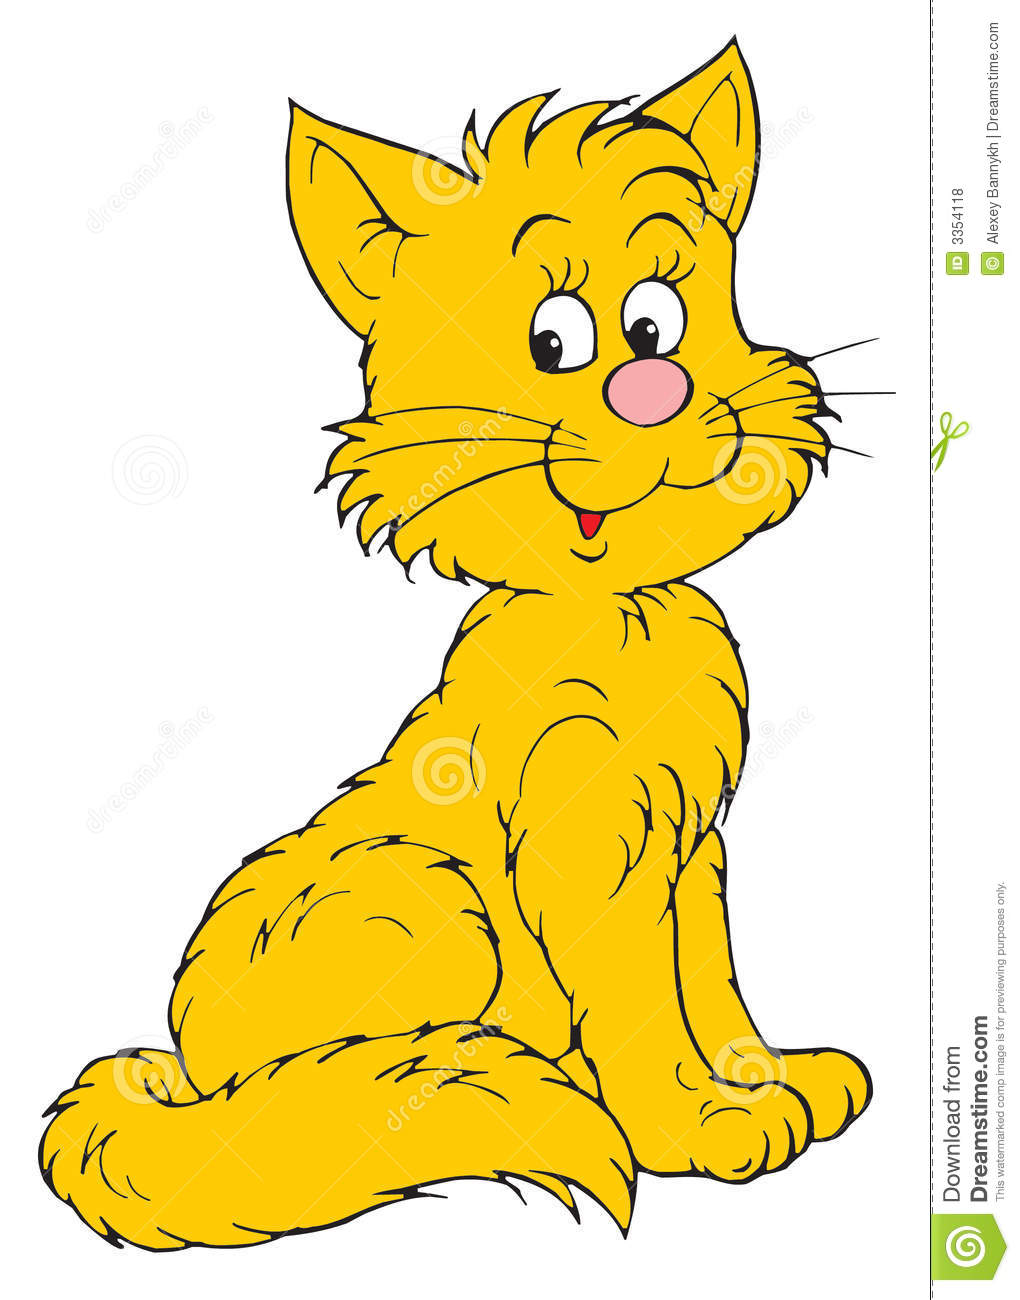 Yellow Cat  Vector Clip Art  Royalty Free Stock Photos   Image    